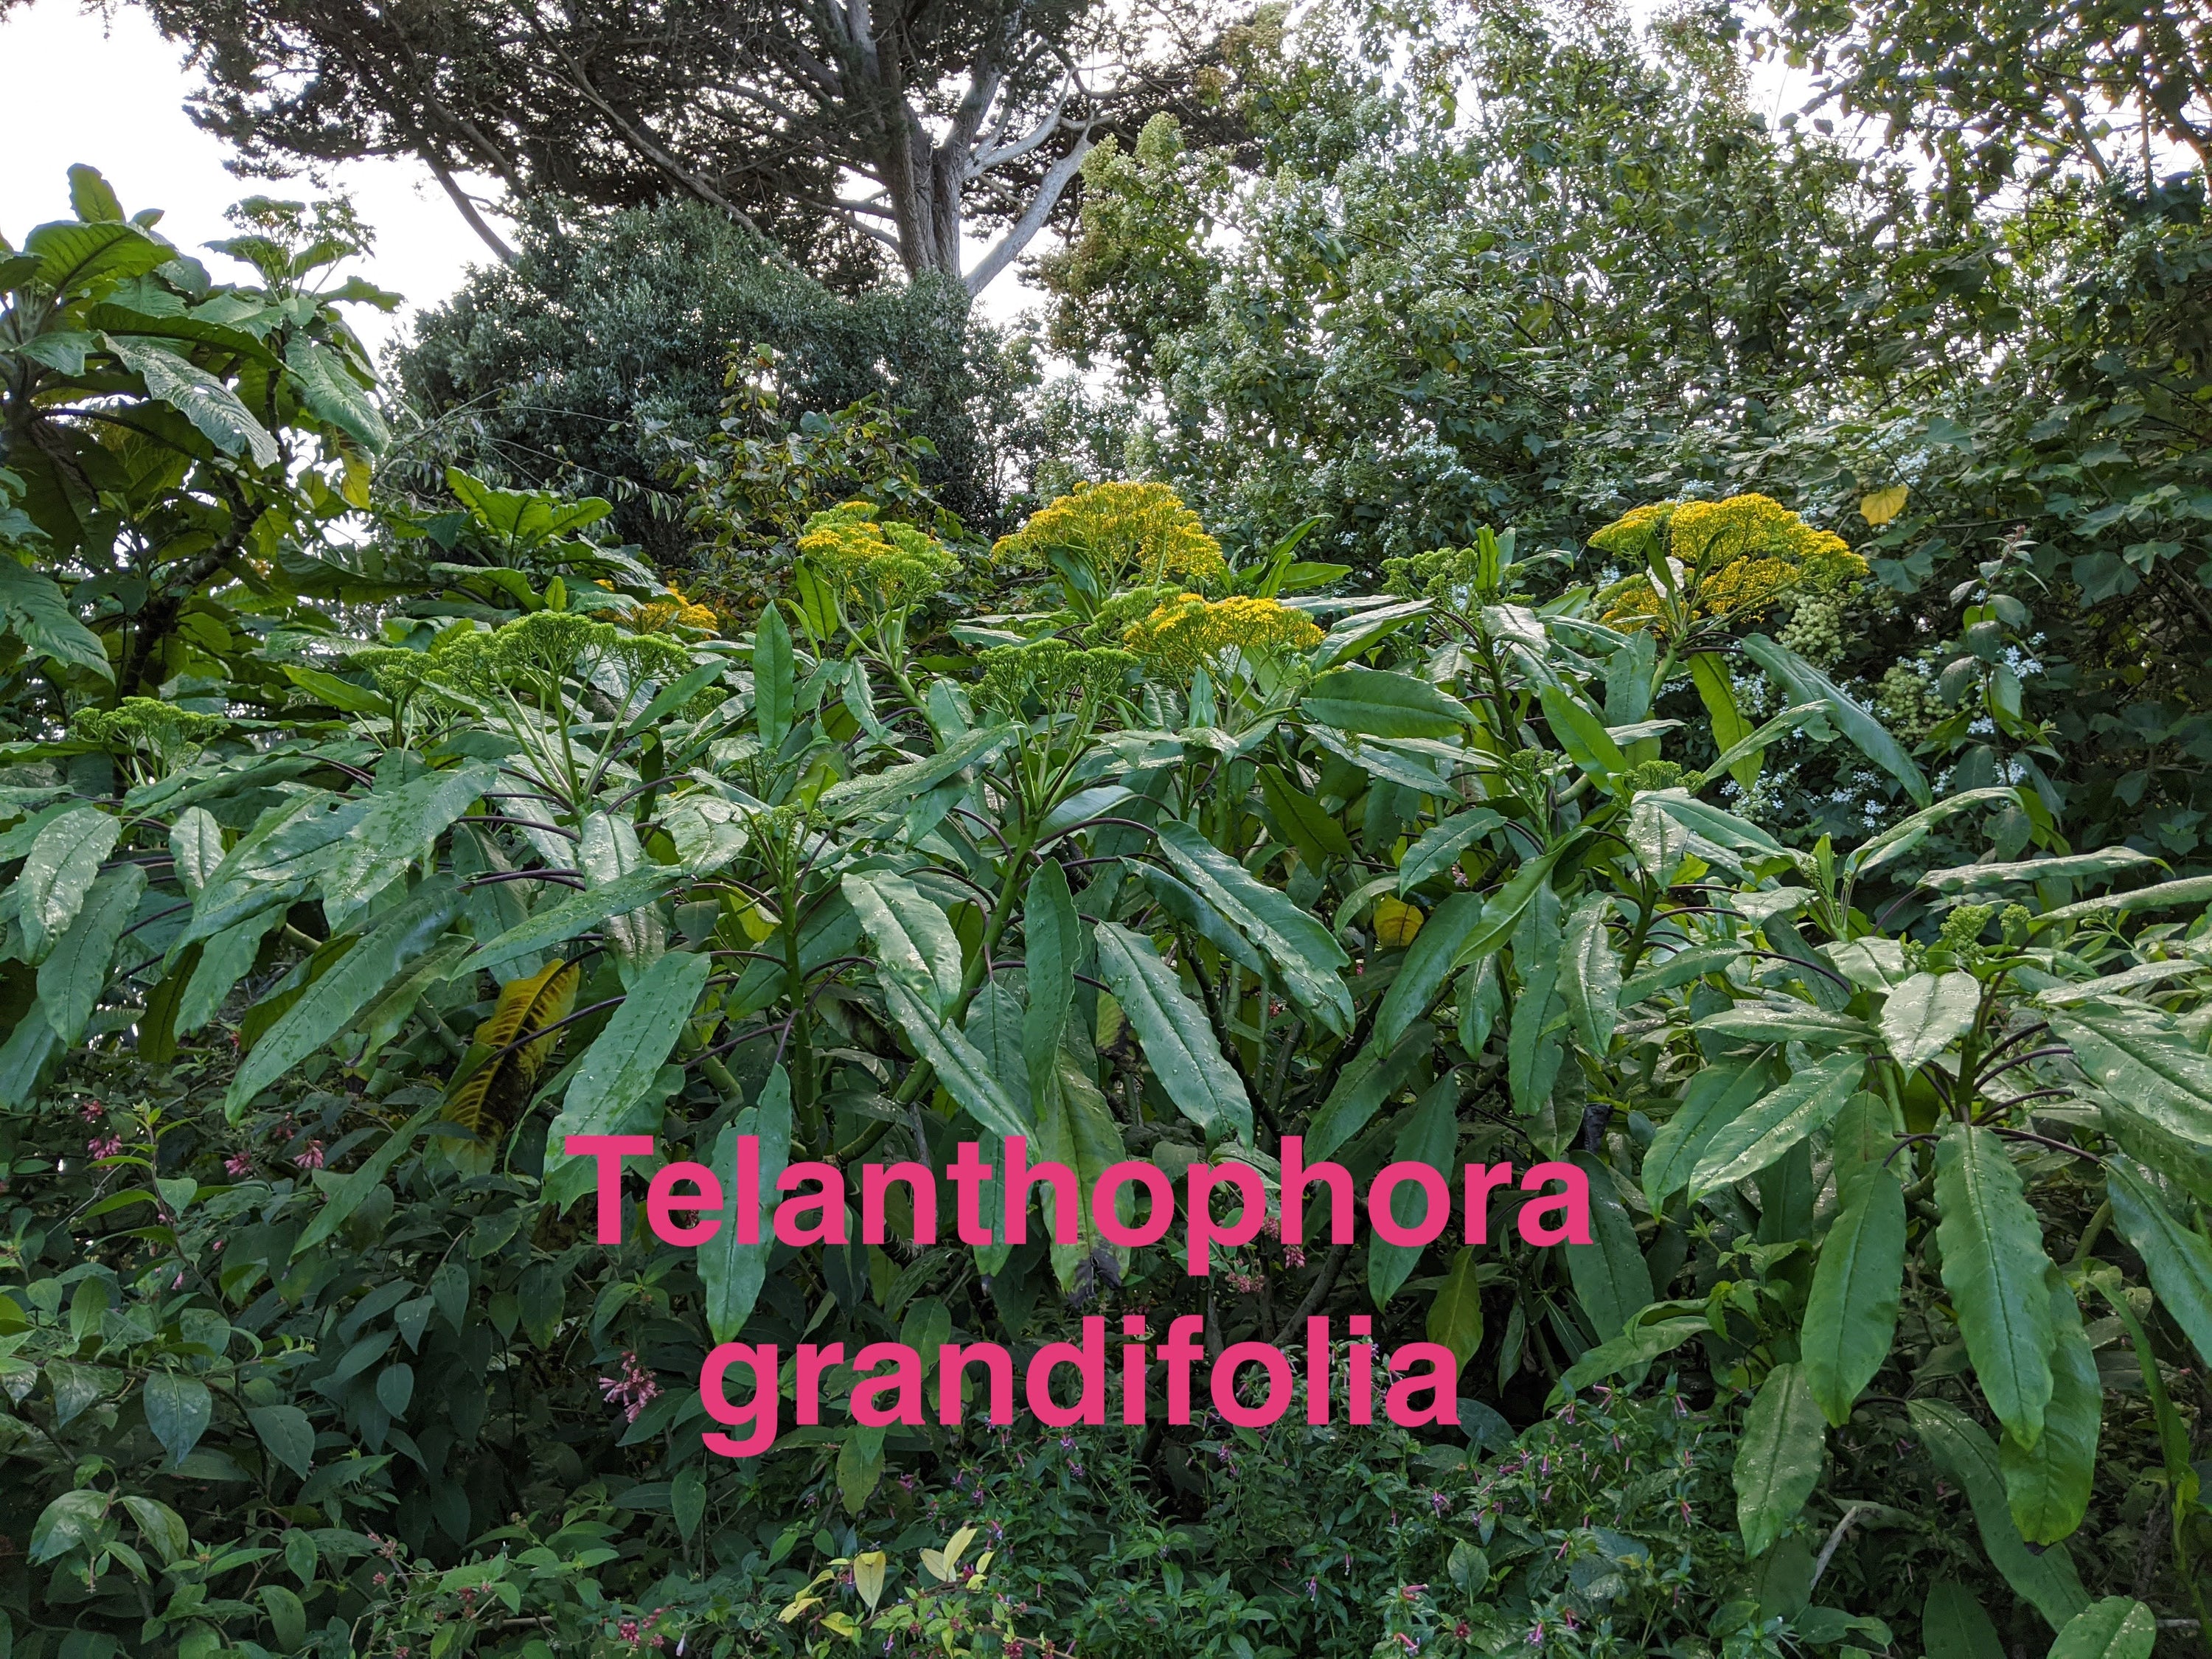 Telanthophora grandifolia